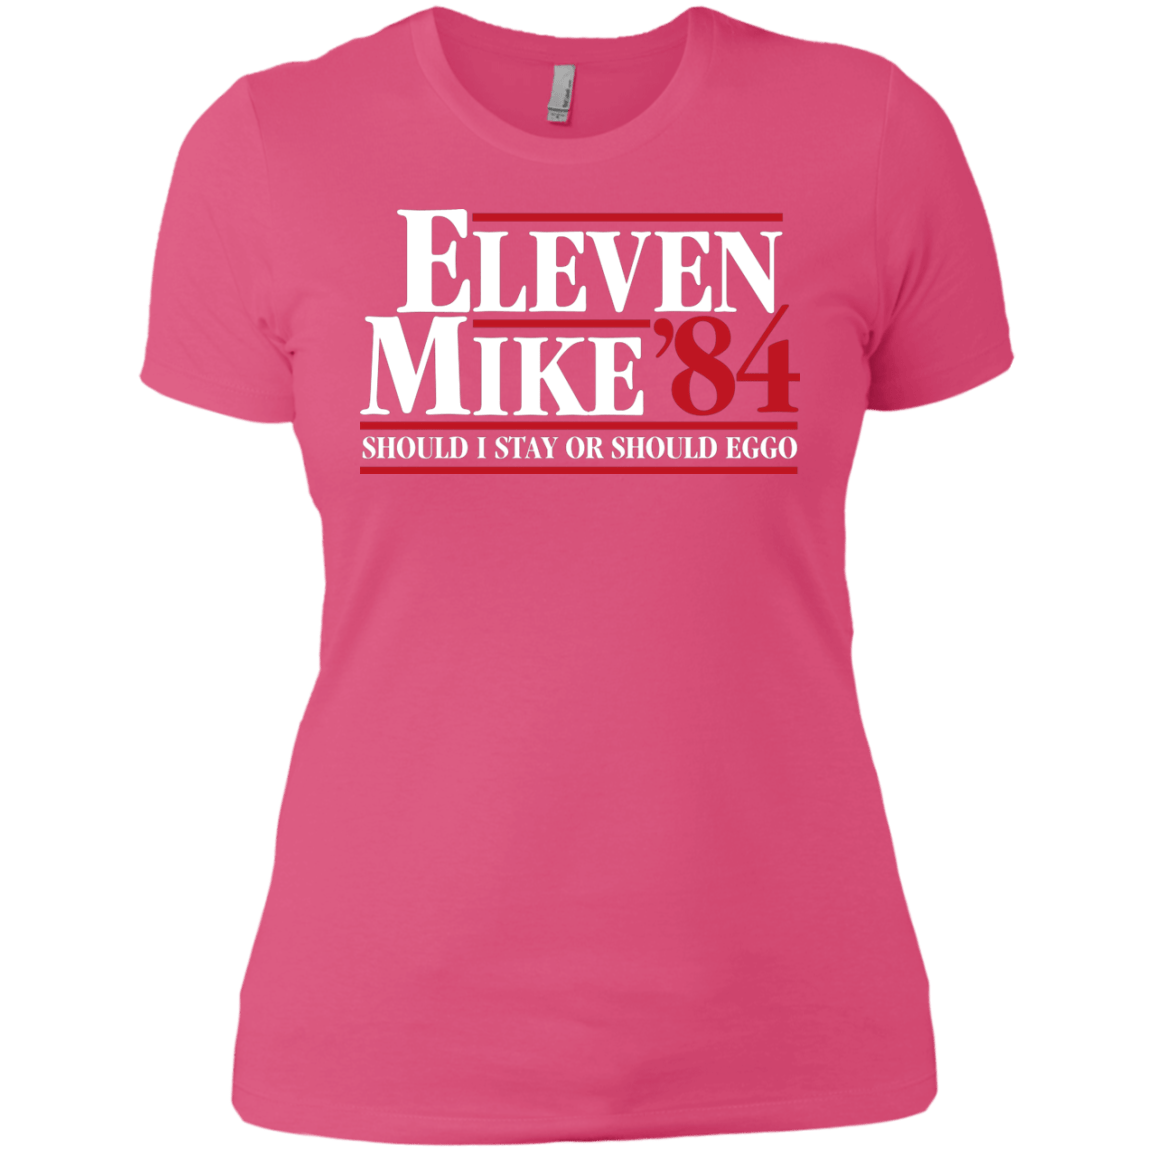 Eleven Mike 84 - Should I Stay or Should Eggo Women's Premium T-Shirt